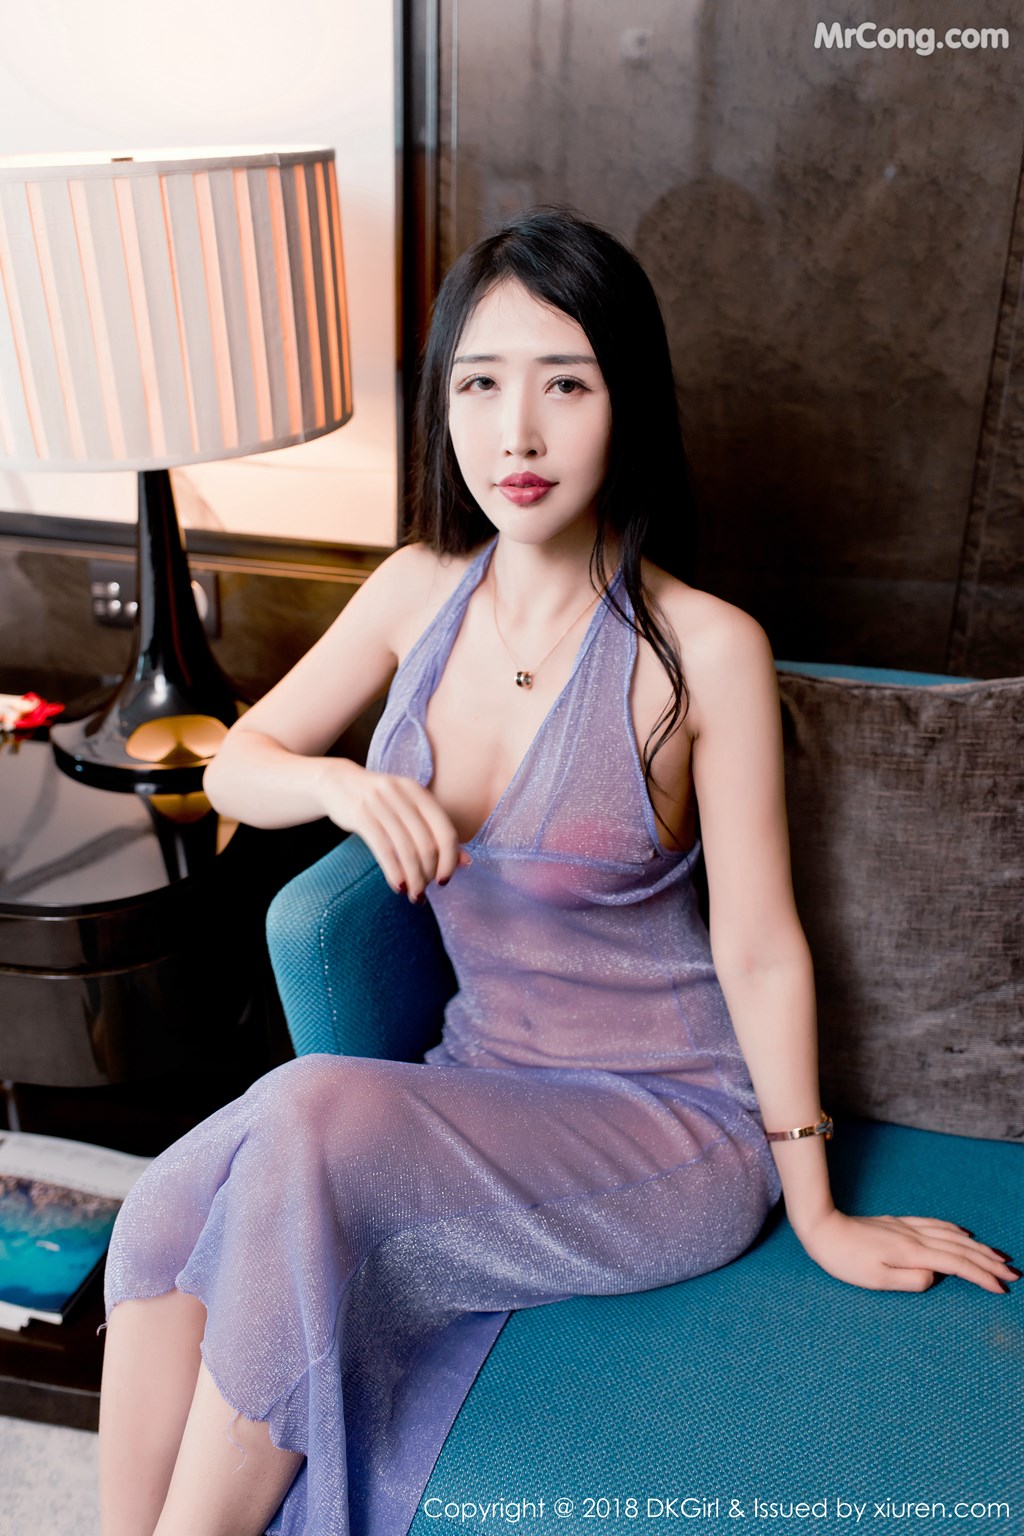 DKGirl Vol.072: Model Yu Xin Yan (余 馨 妍) (51 photos)